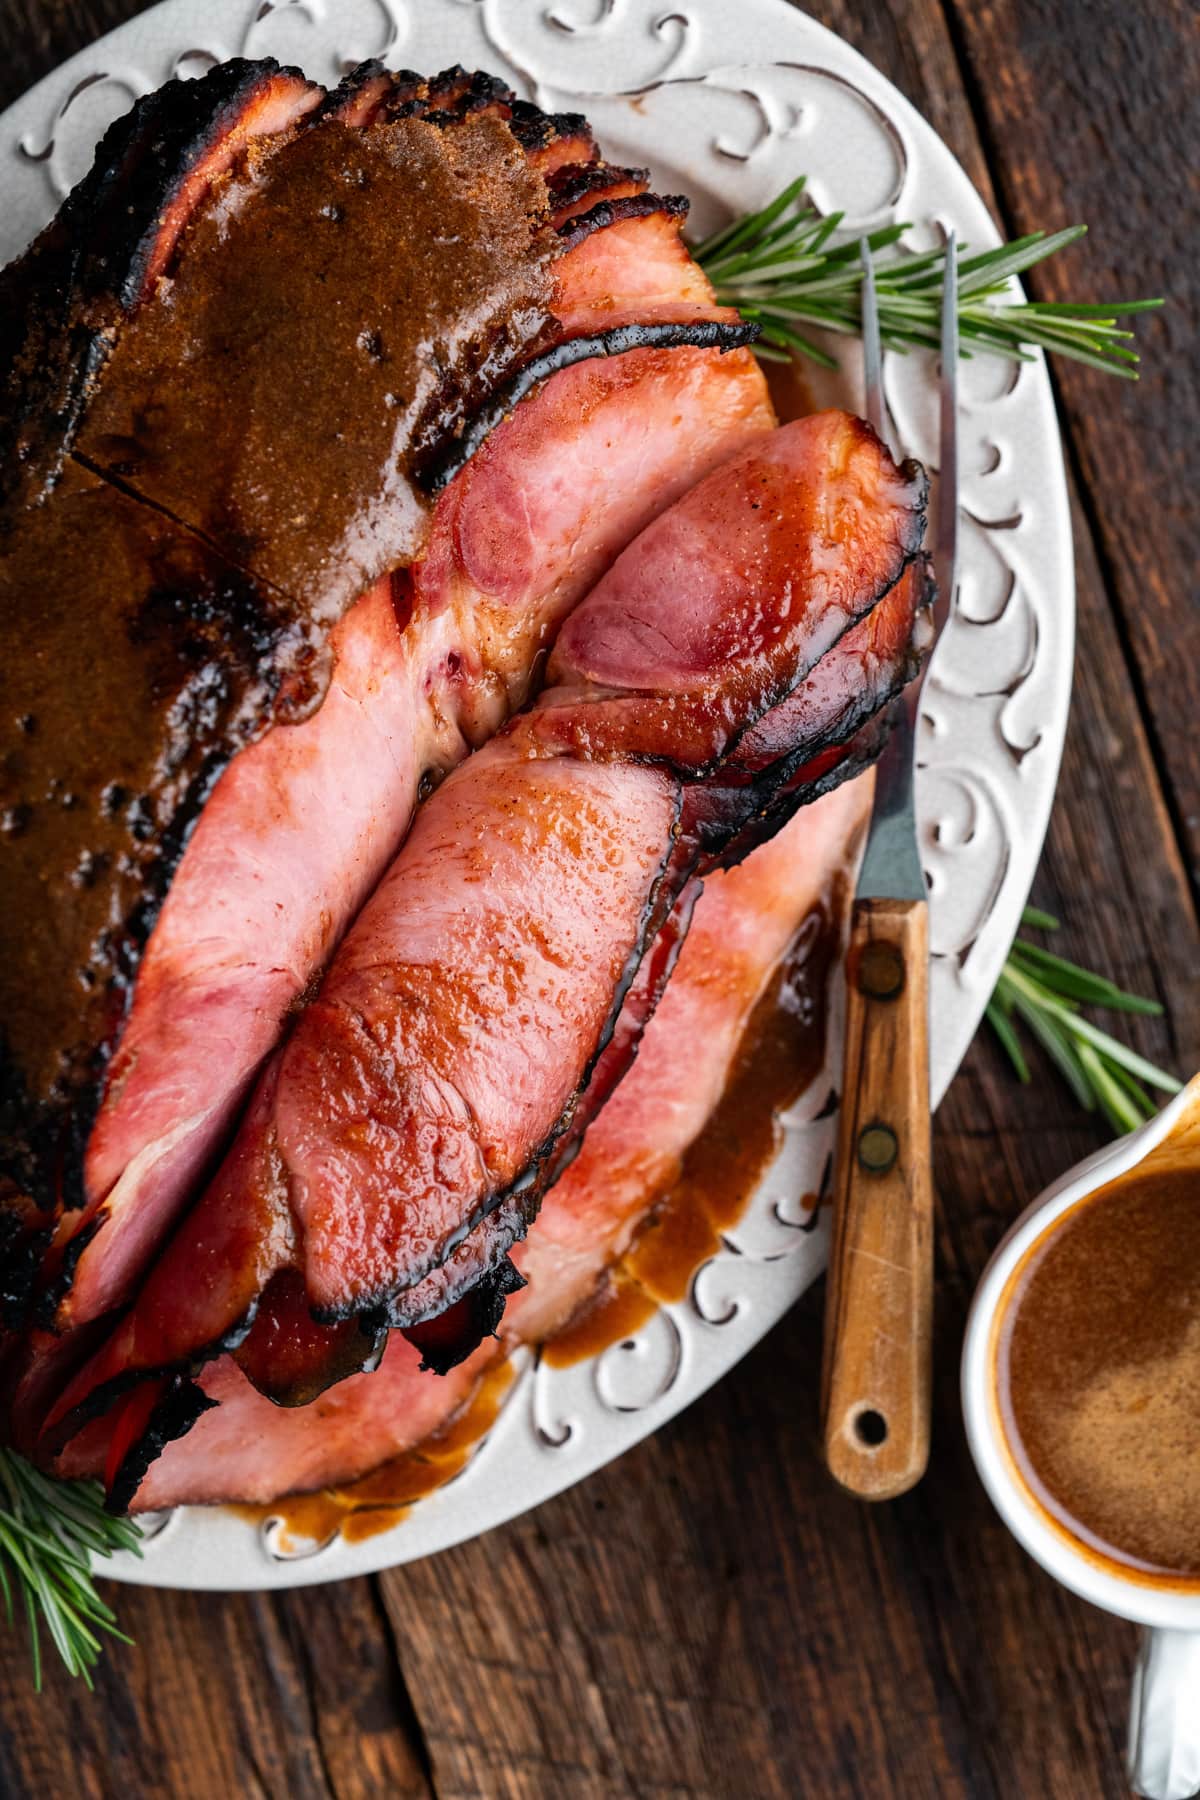 Sliced ham sitting on a serving plate.